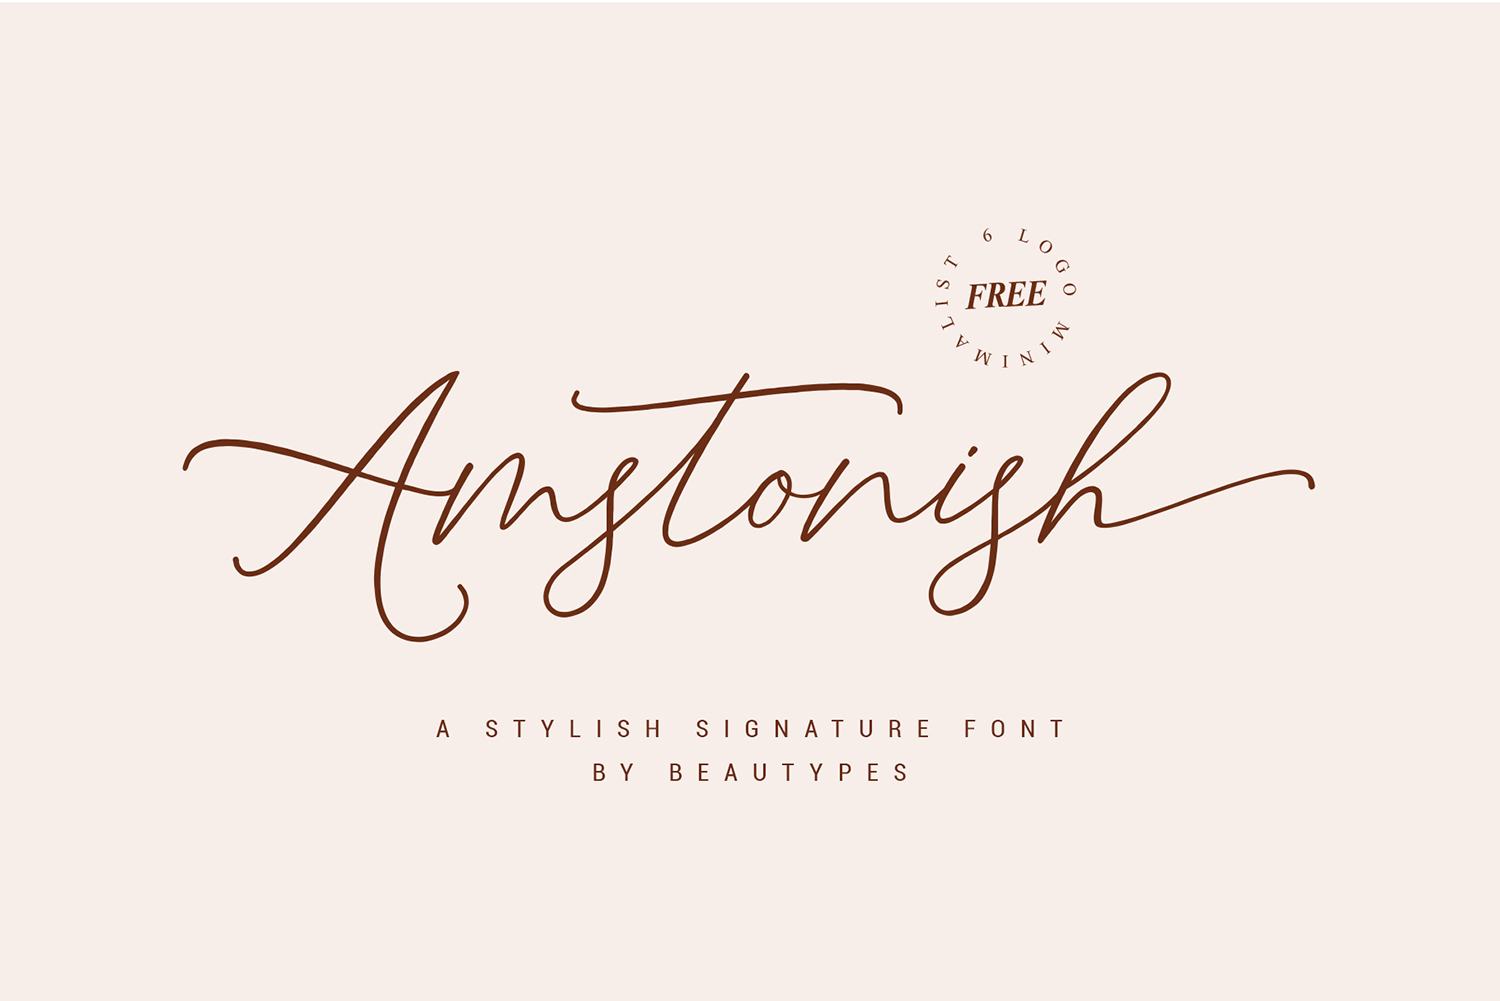 Amstonish Free Font